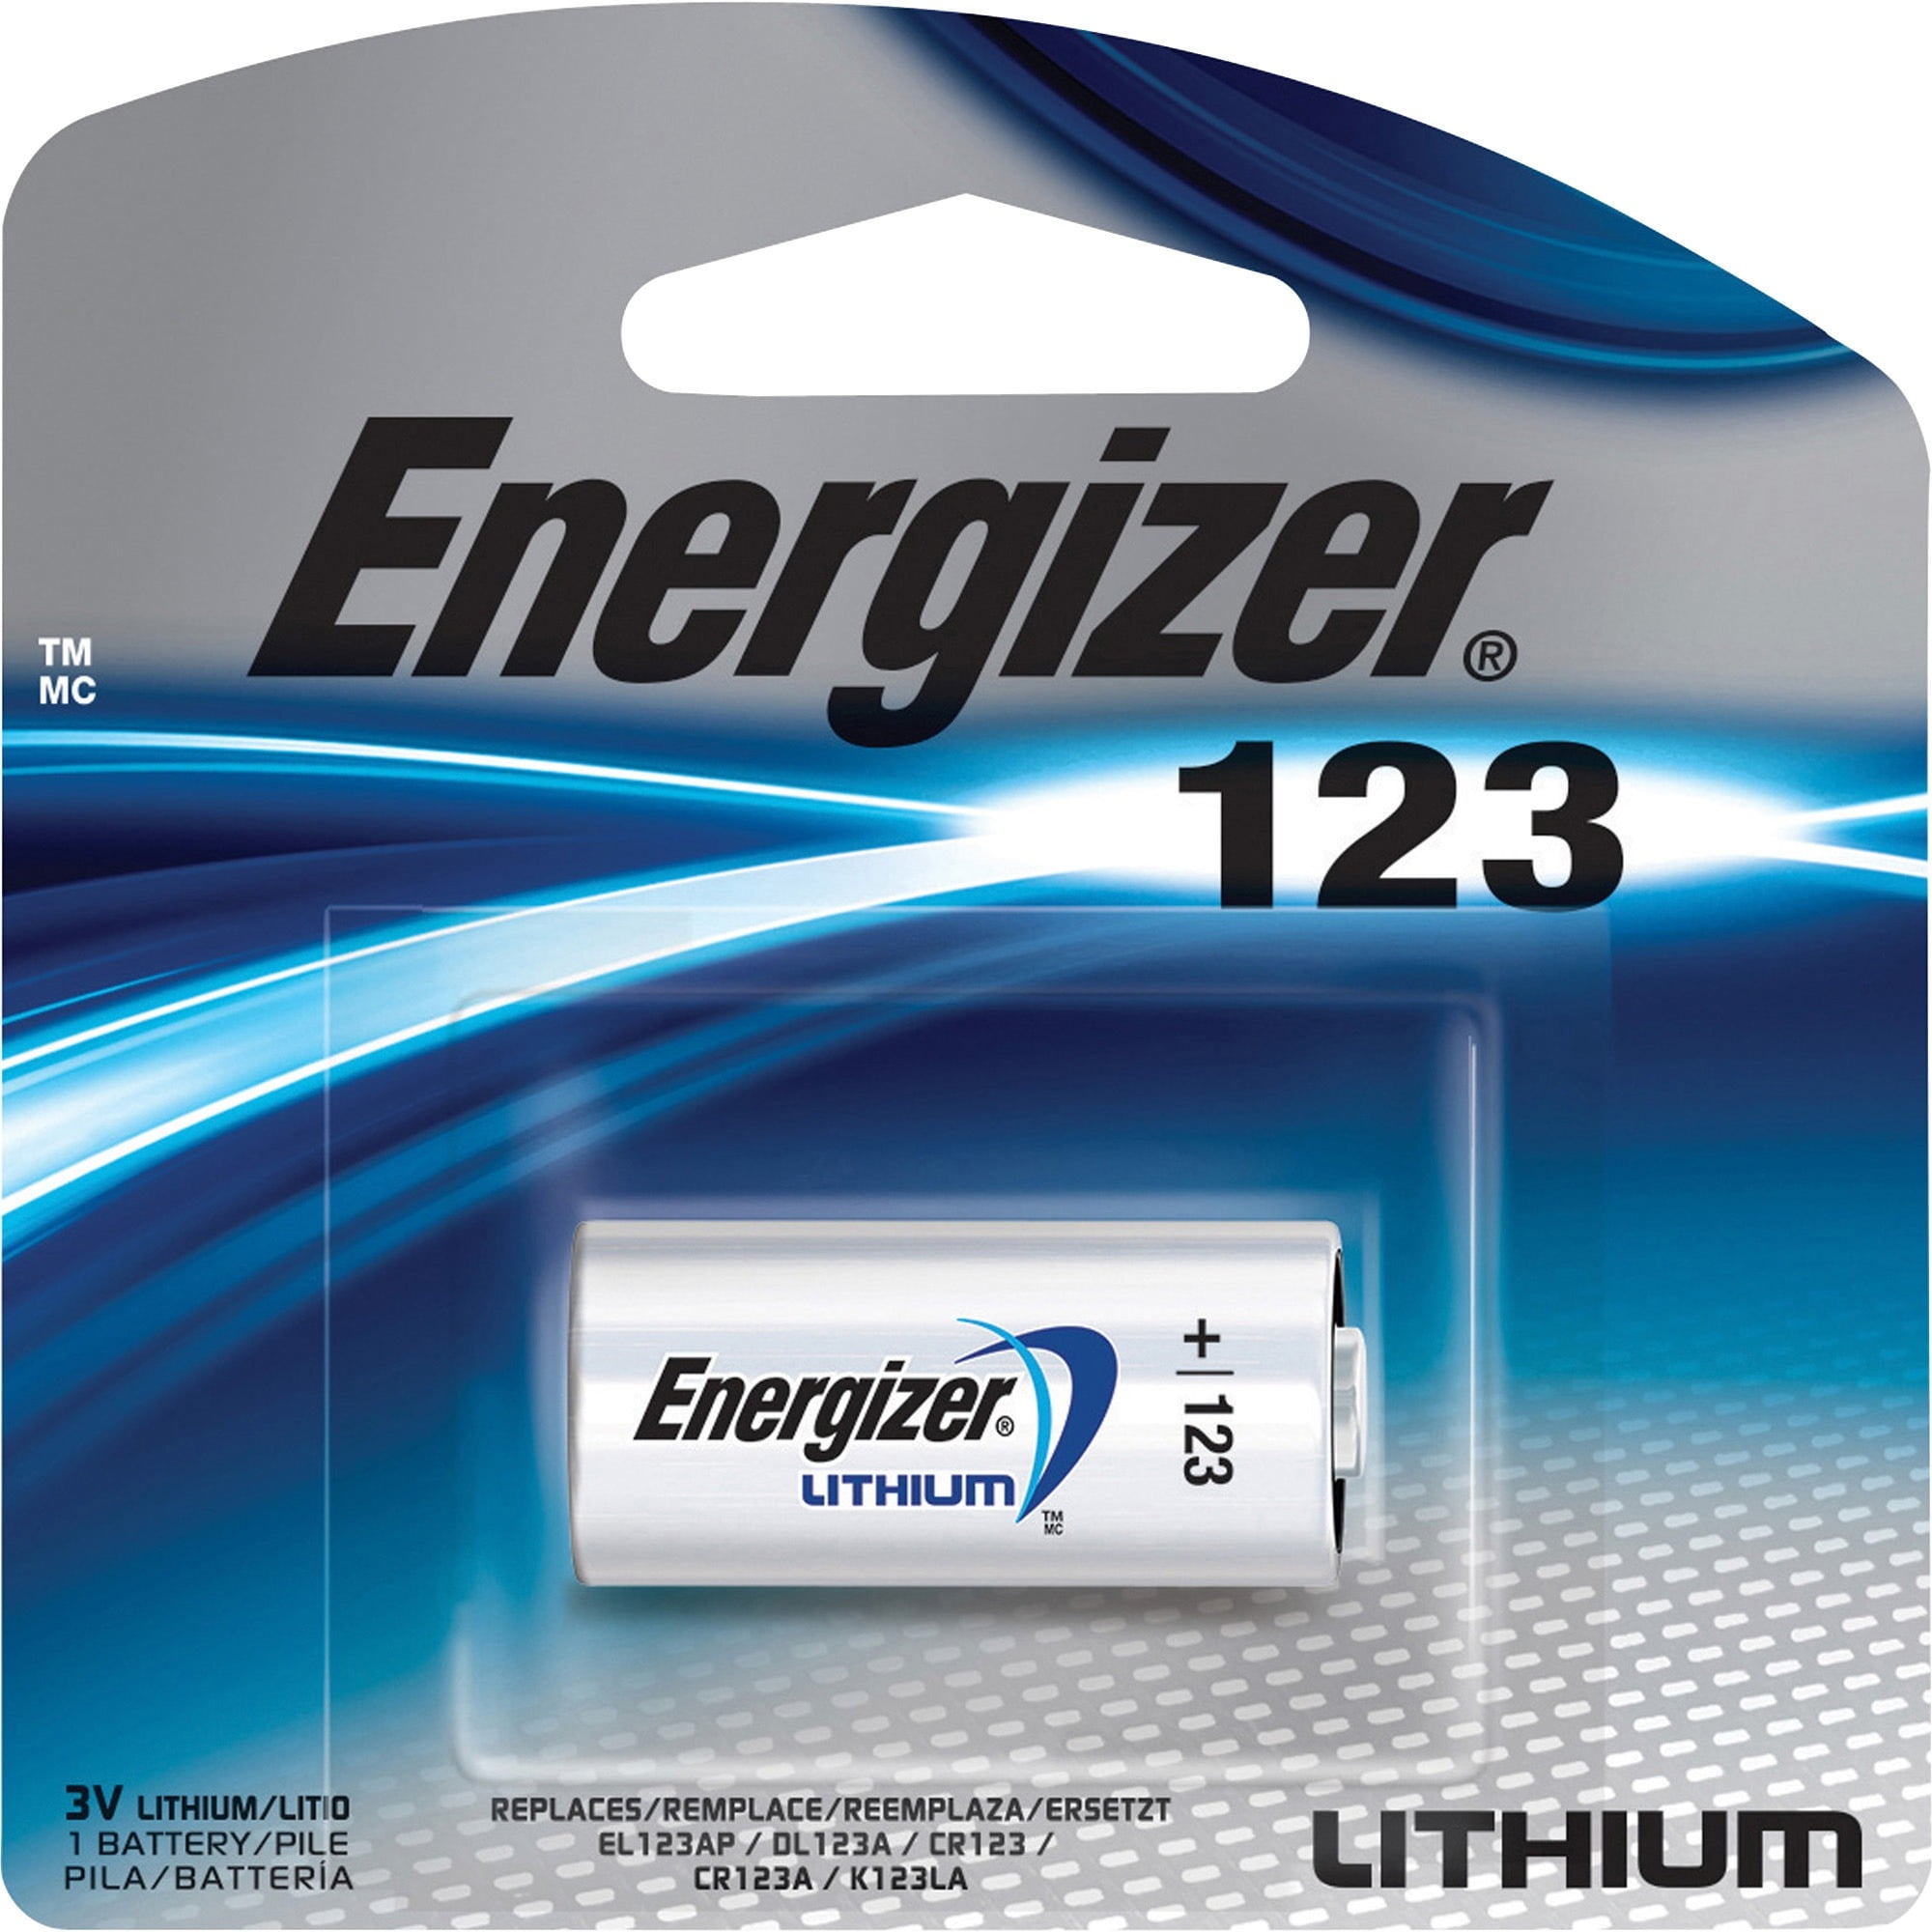 Energizer Lithium 123 Battery - 1 Pack + 30% Off! - Walmart.com